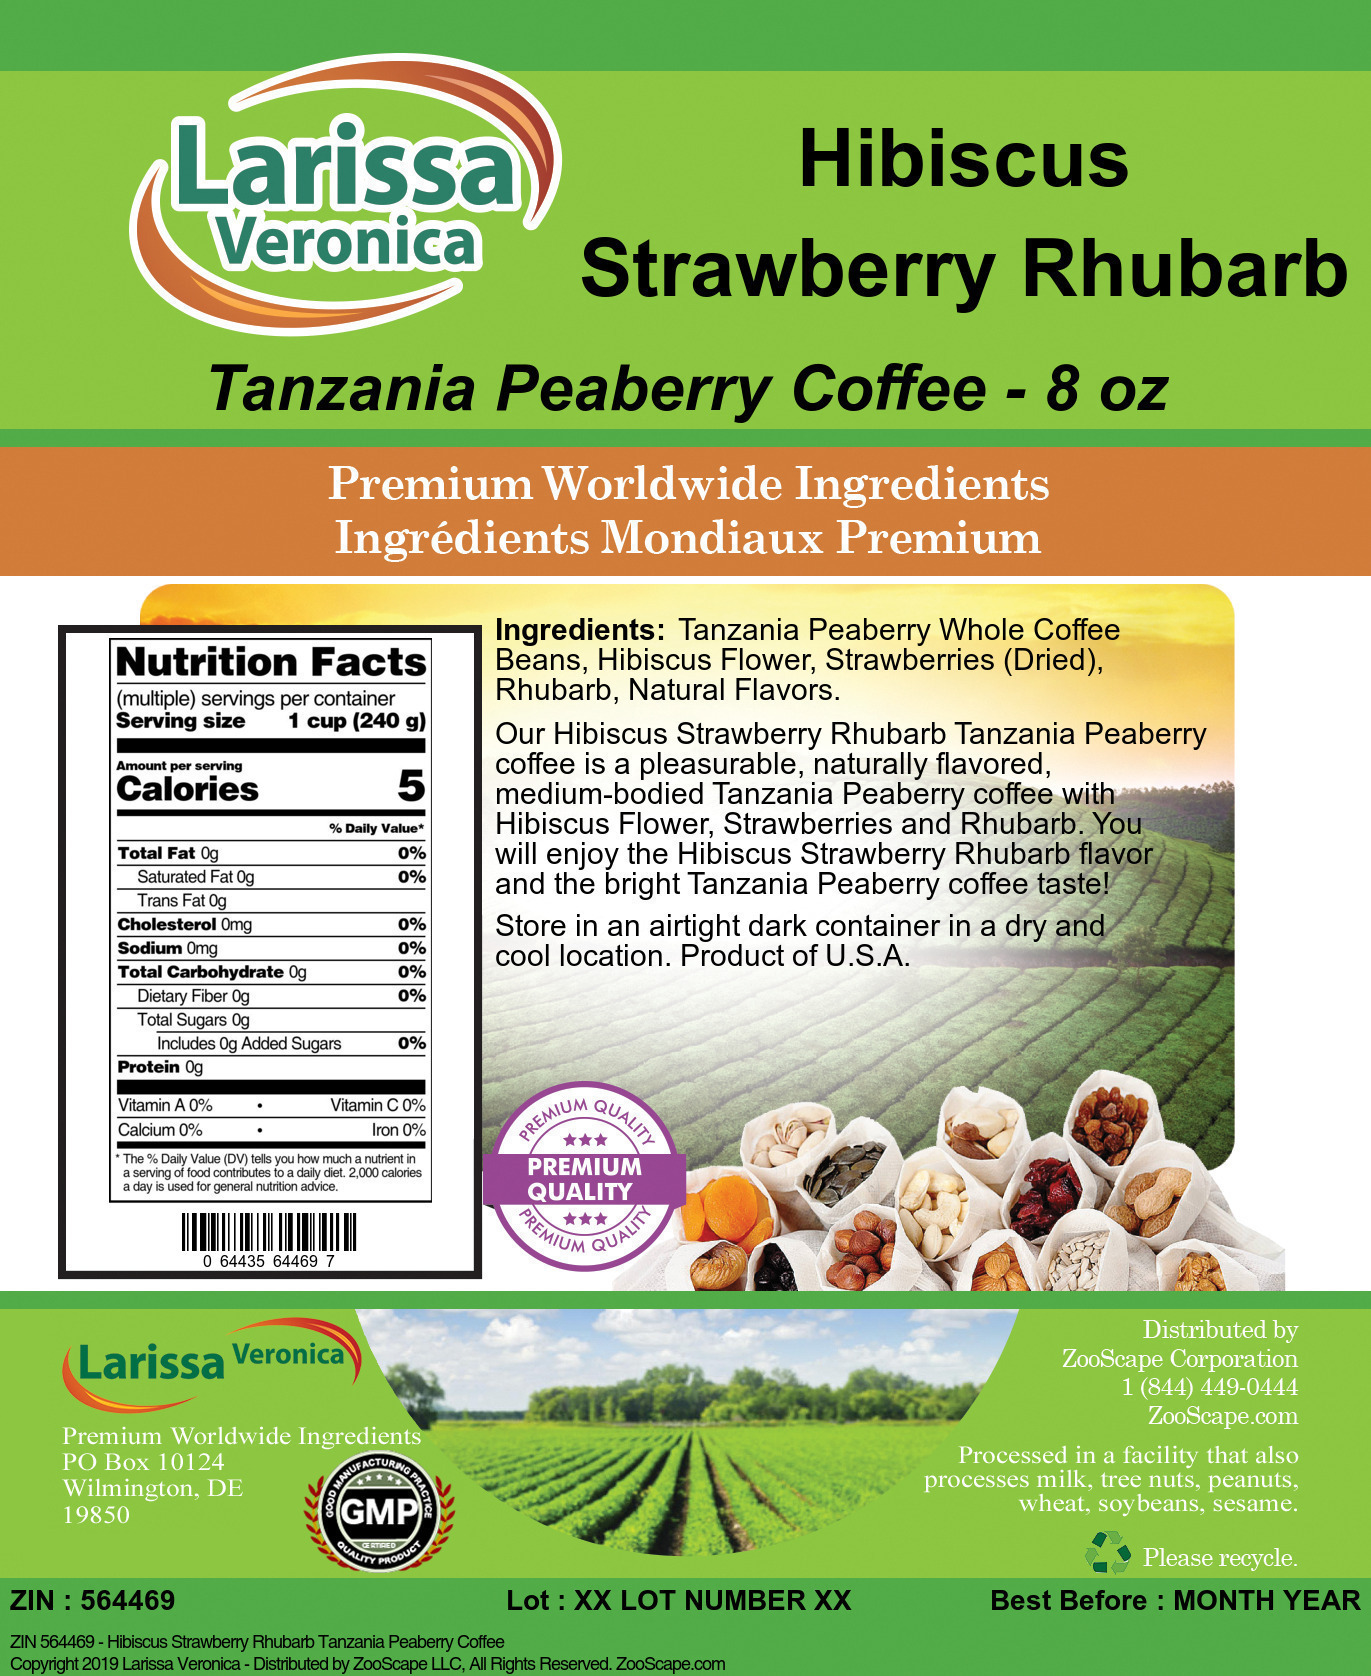 Hibiscus Strawberry Rhubarb Tanzania Peaberry Coffee - Label